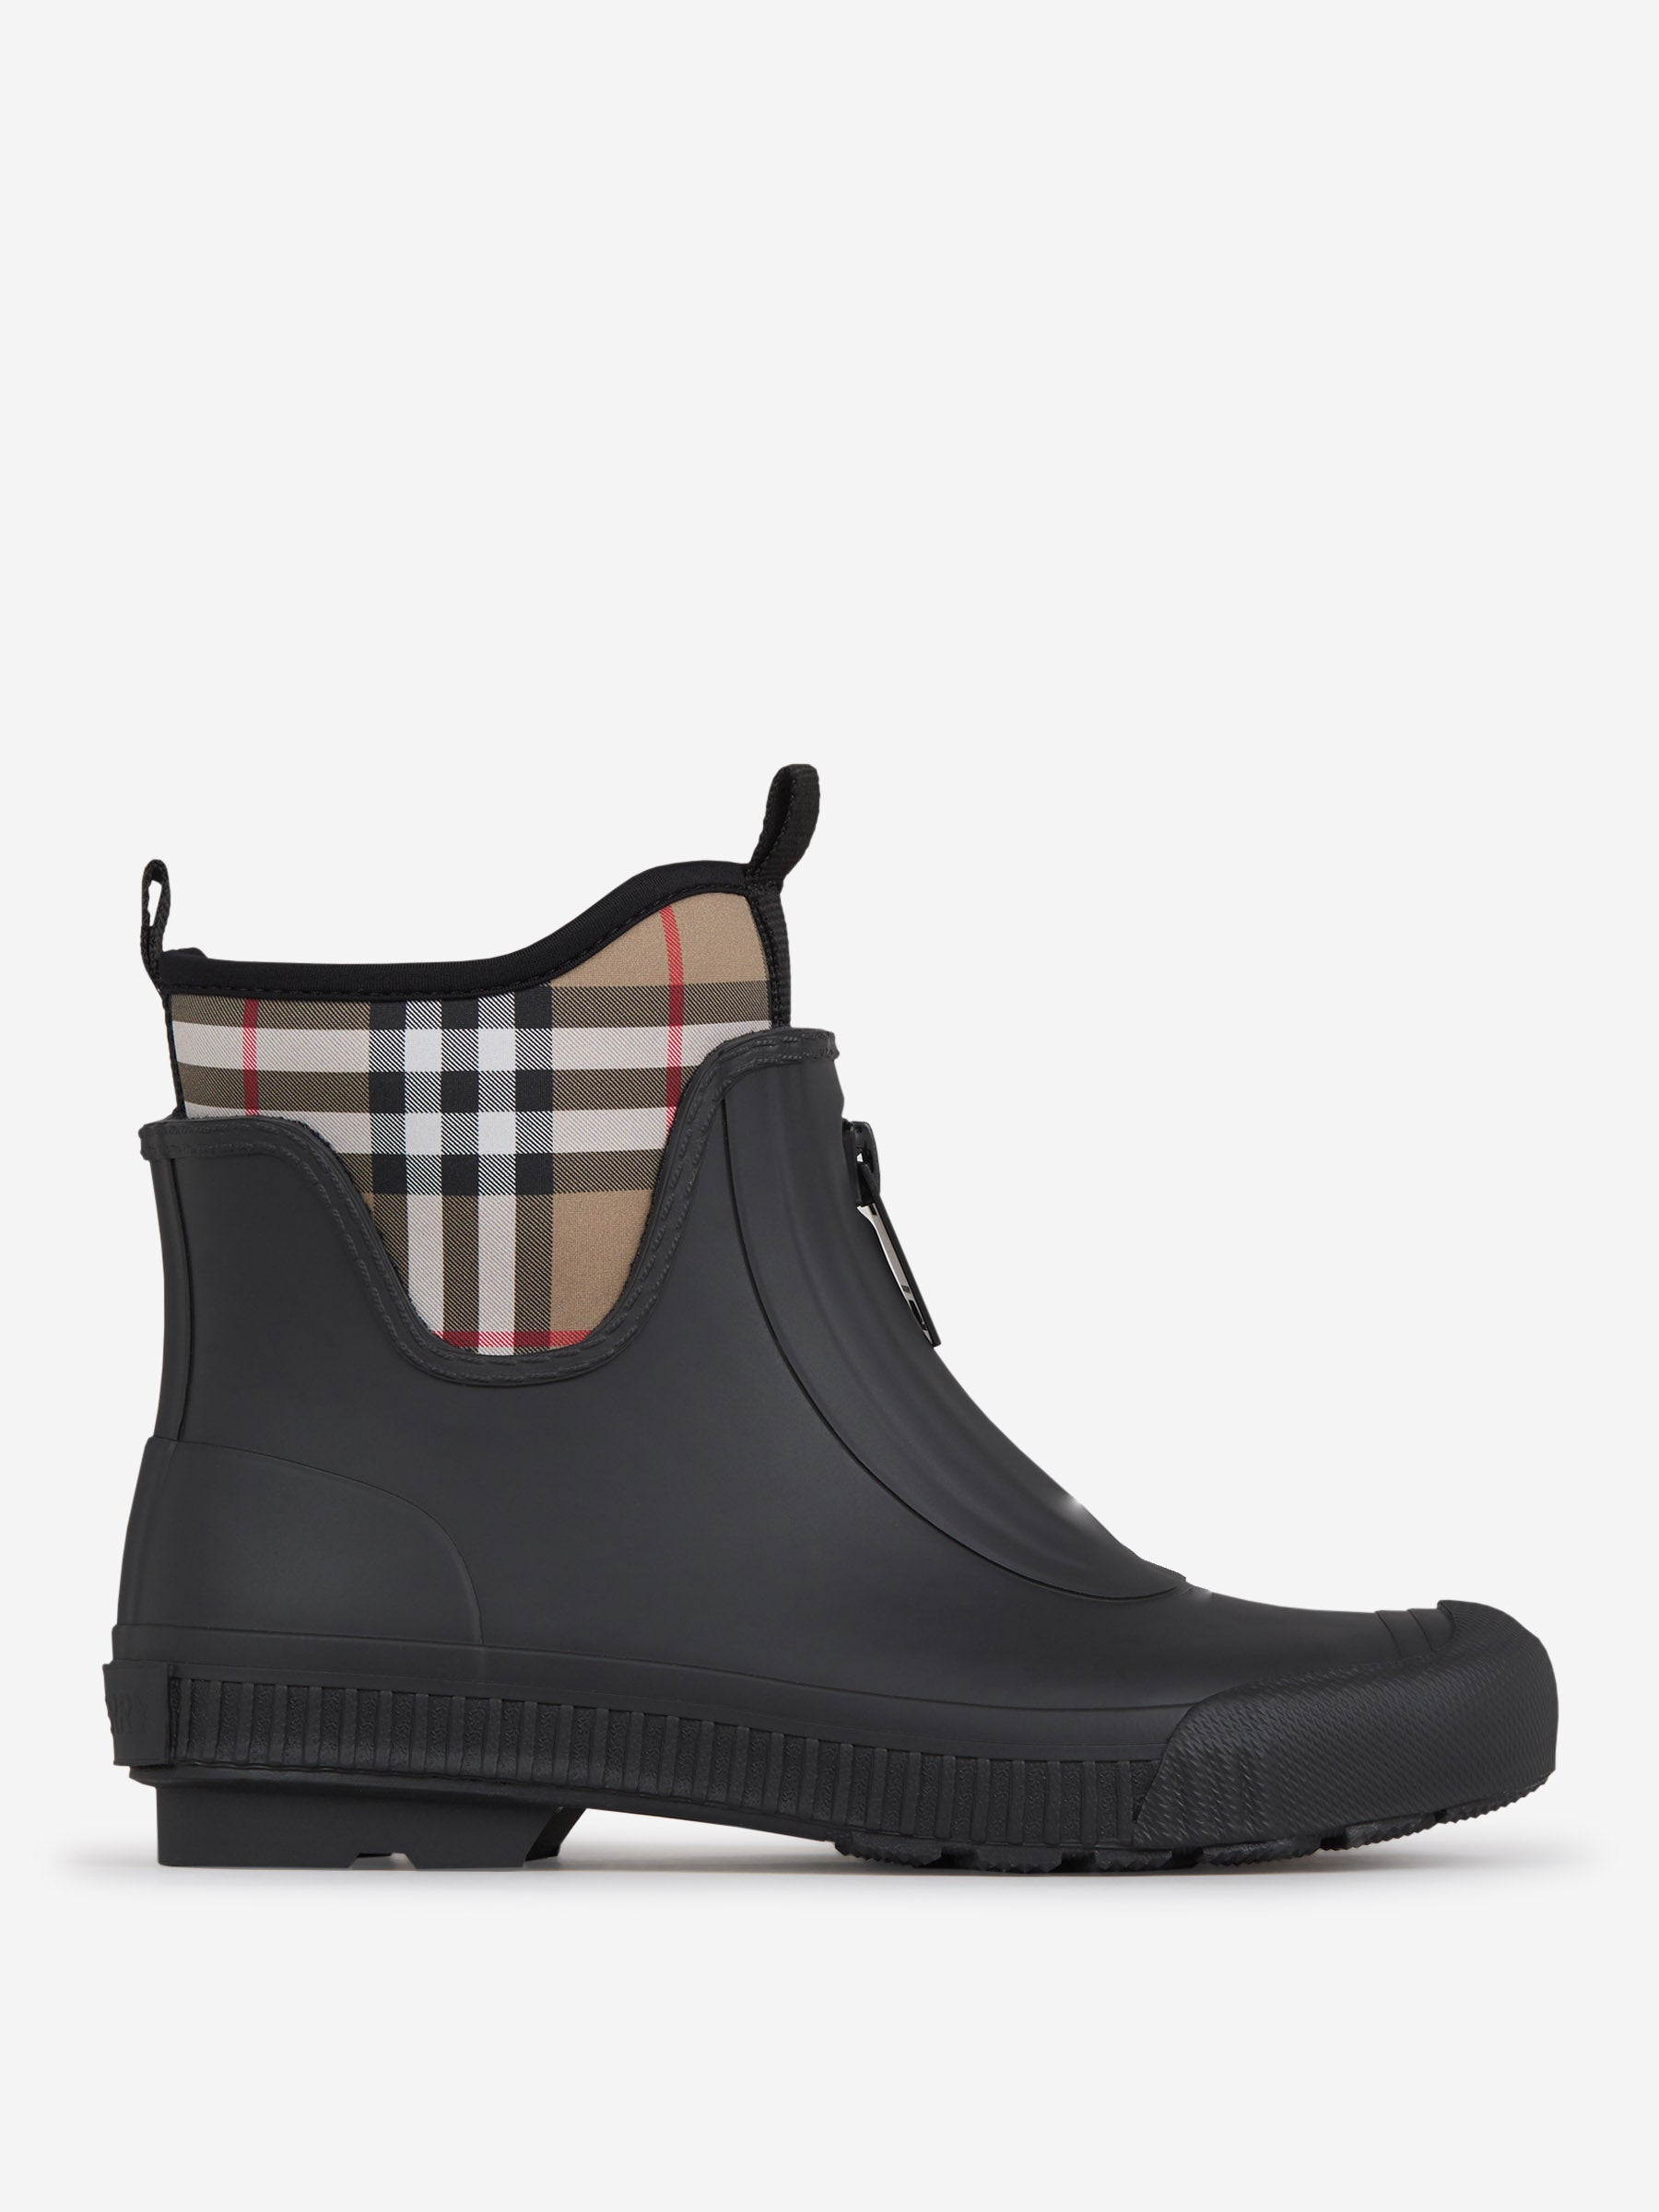 Checkered Rain Boots